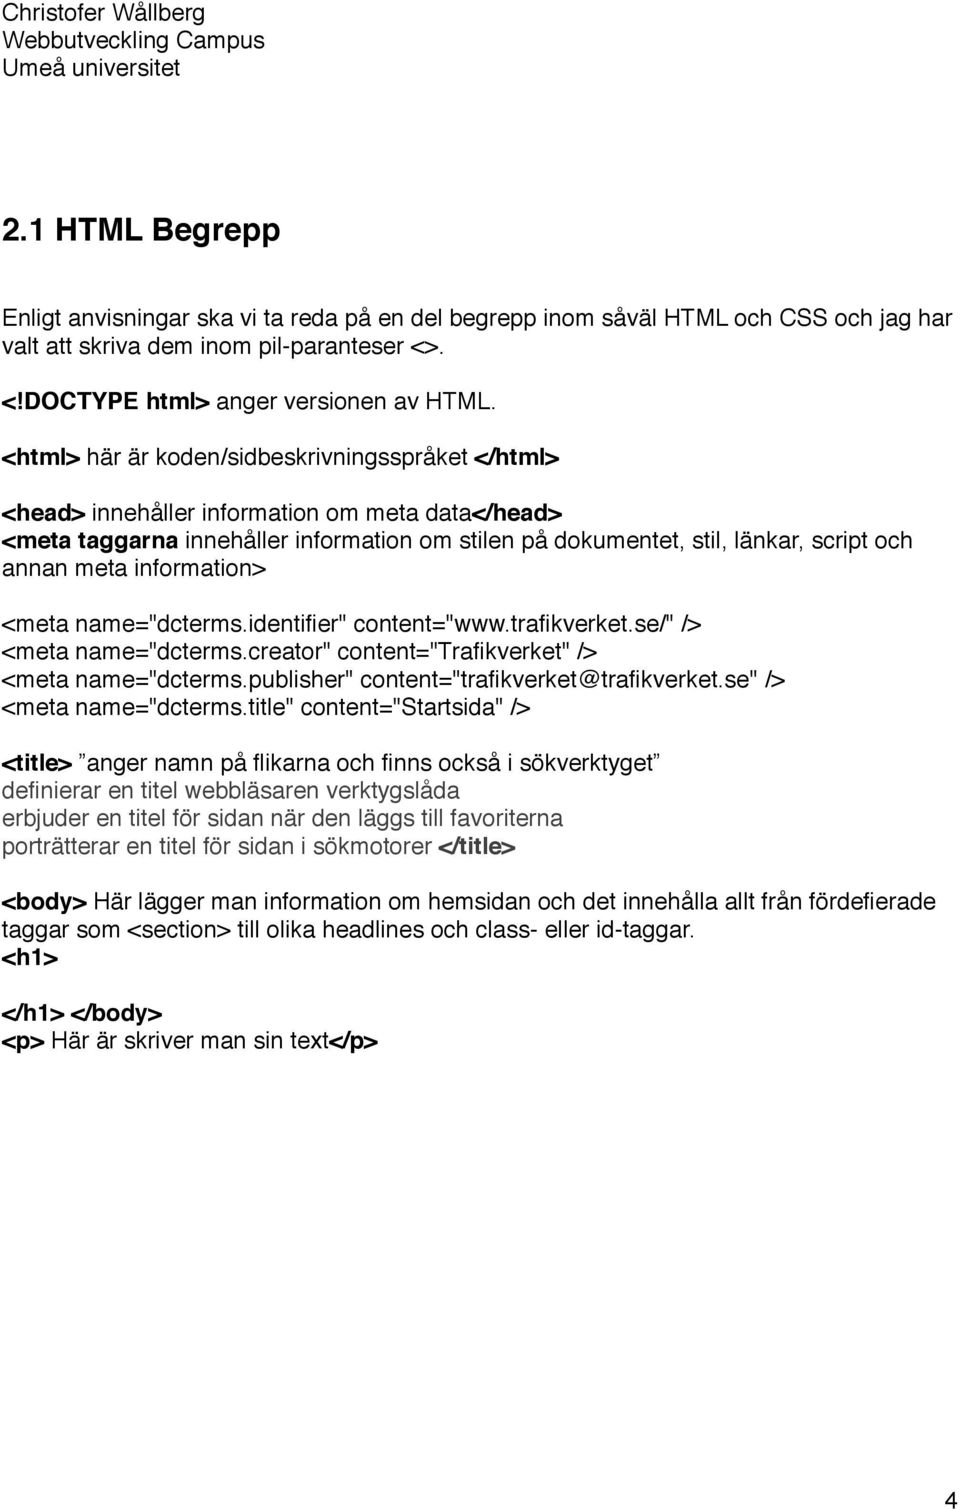 information> <meta name="dcterms.identifier" content="www.trafikverket.se/" /> <meta name="dcterms.creator" content="trafikverket" /> <meta name="dcterms.publisher" content="trafikverket@trafikverket.